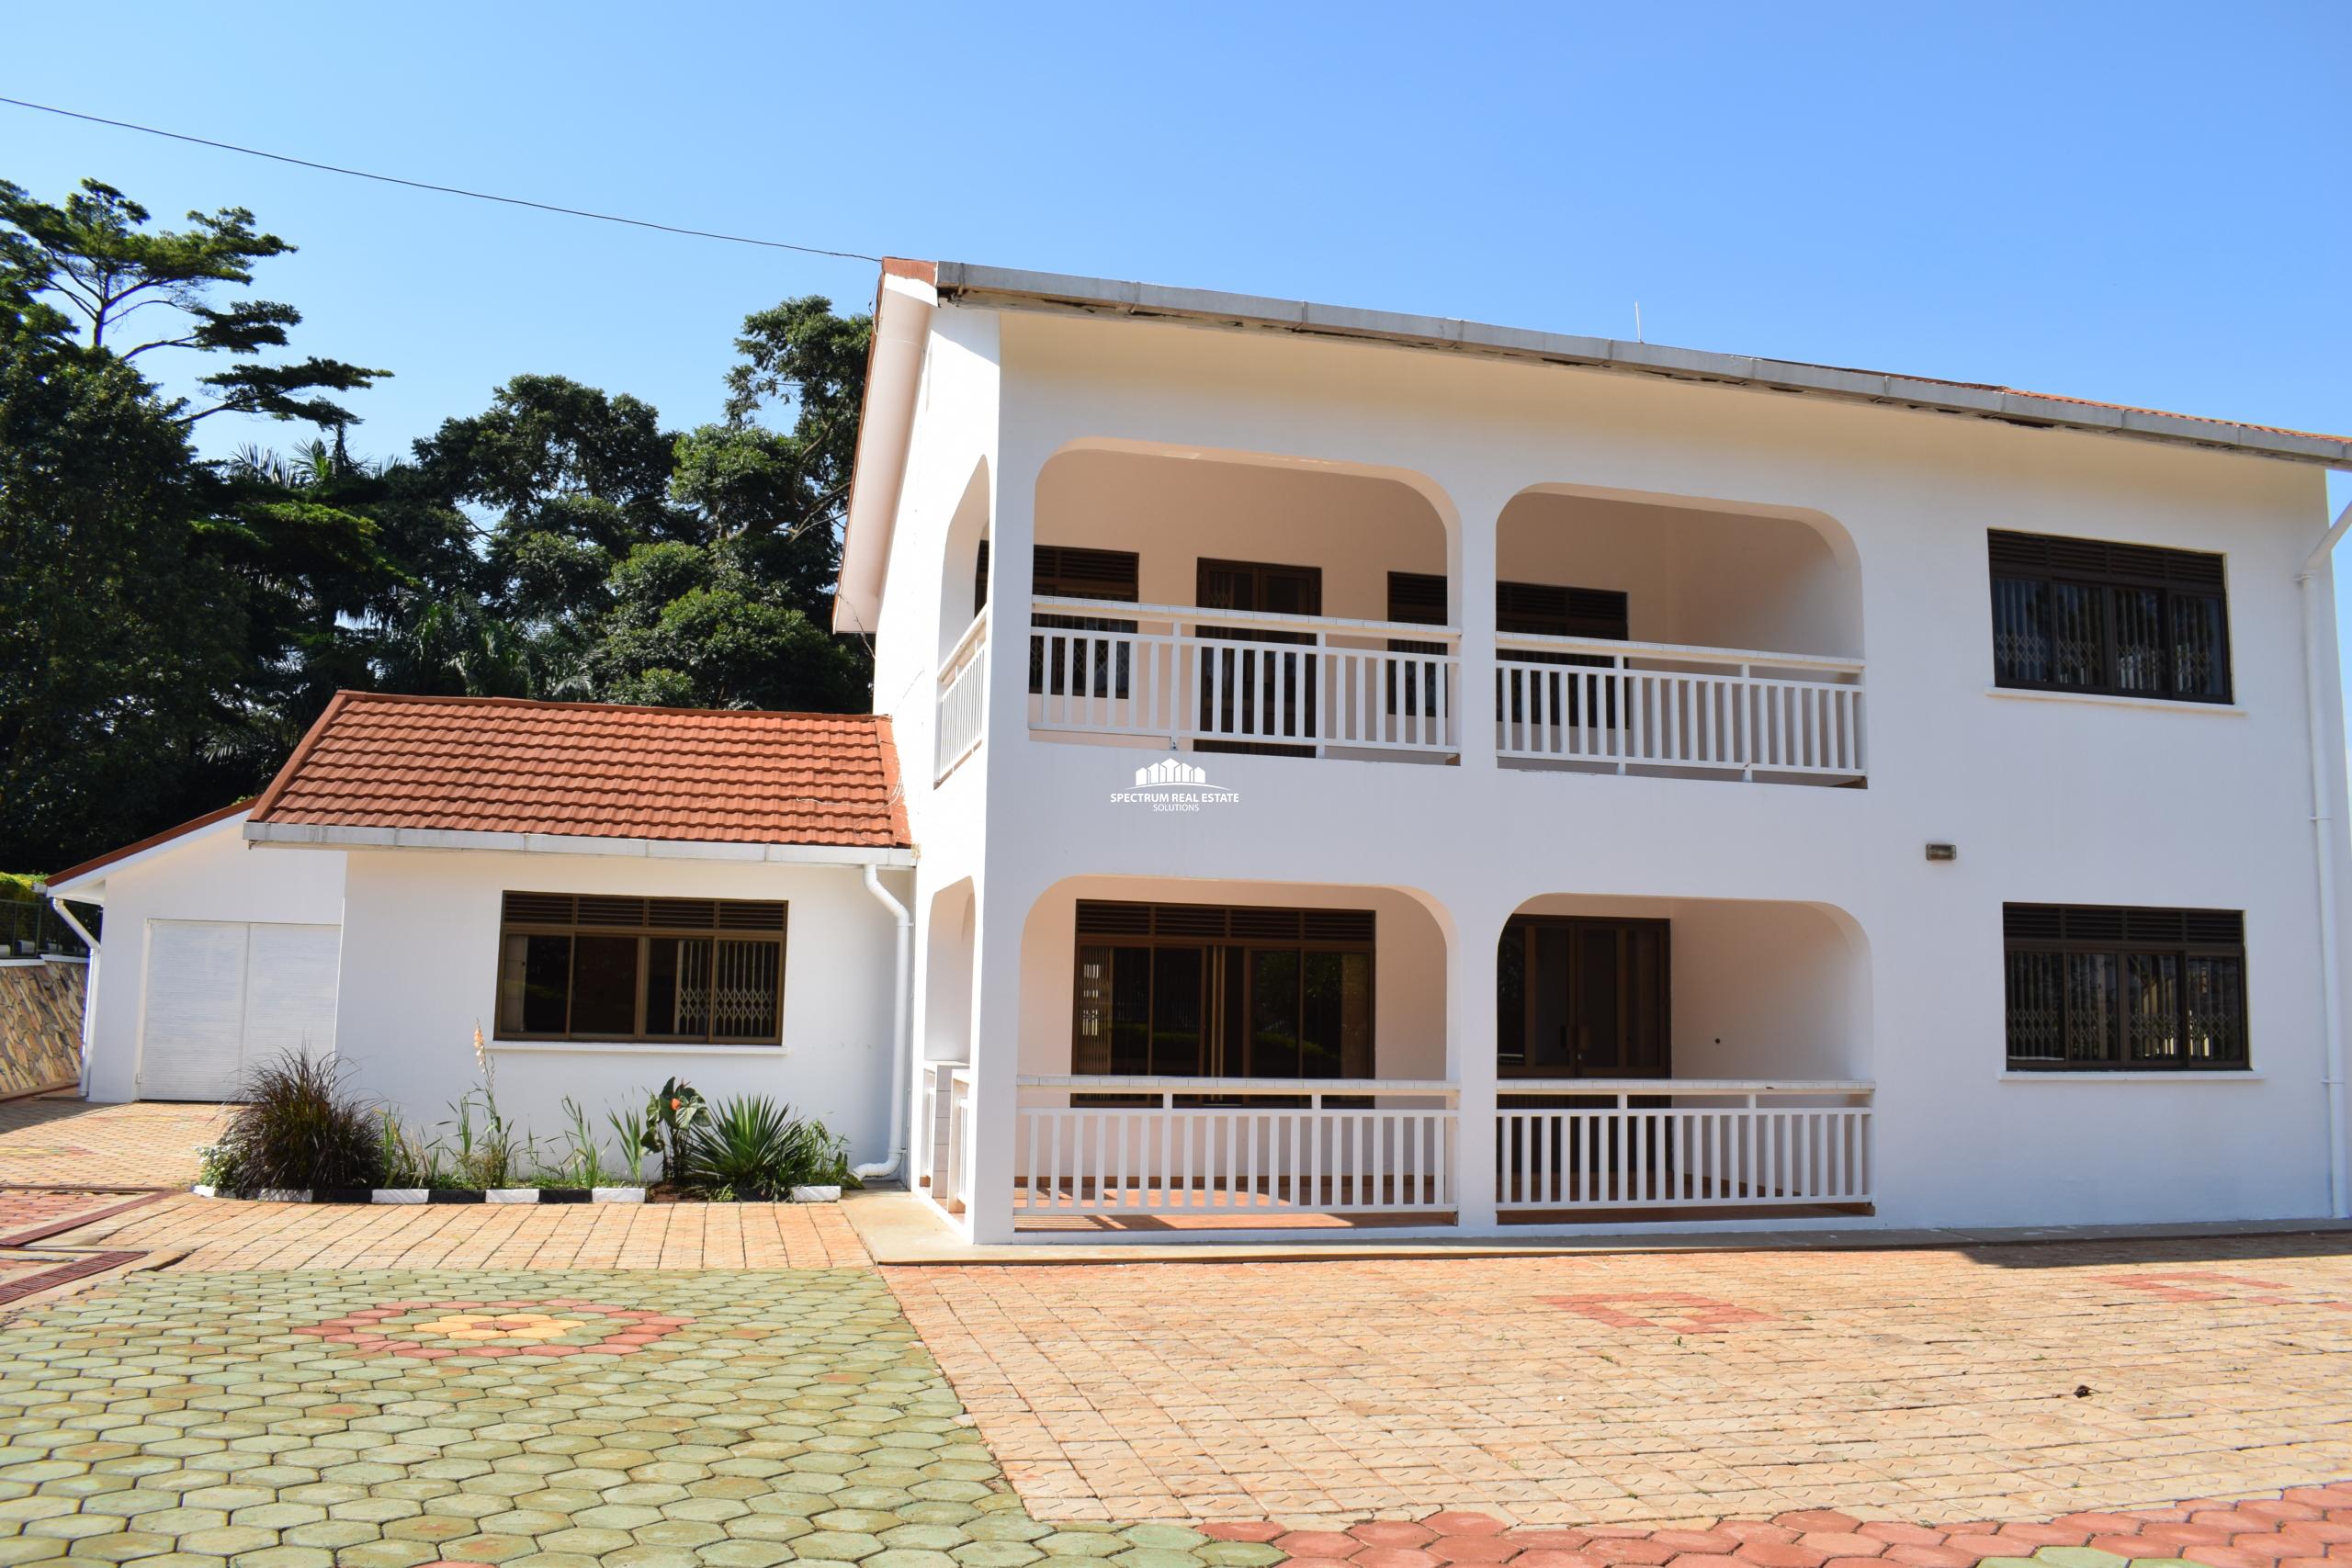 This house for sale in Lubowa Kampala Uganda